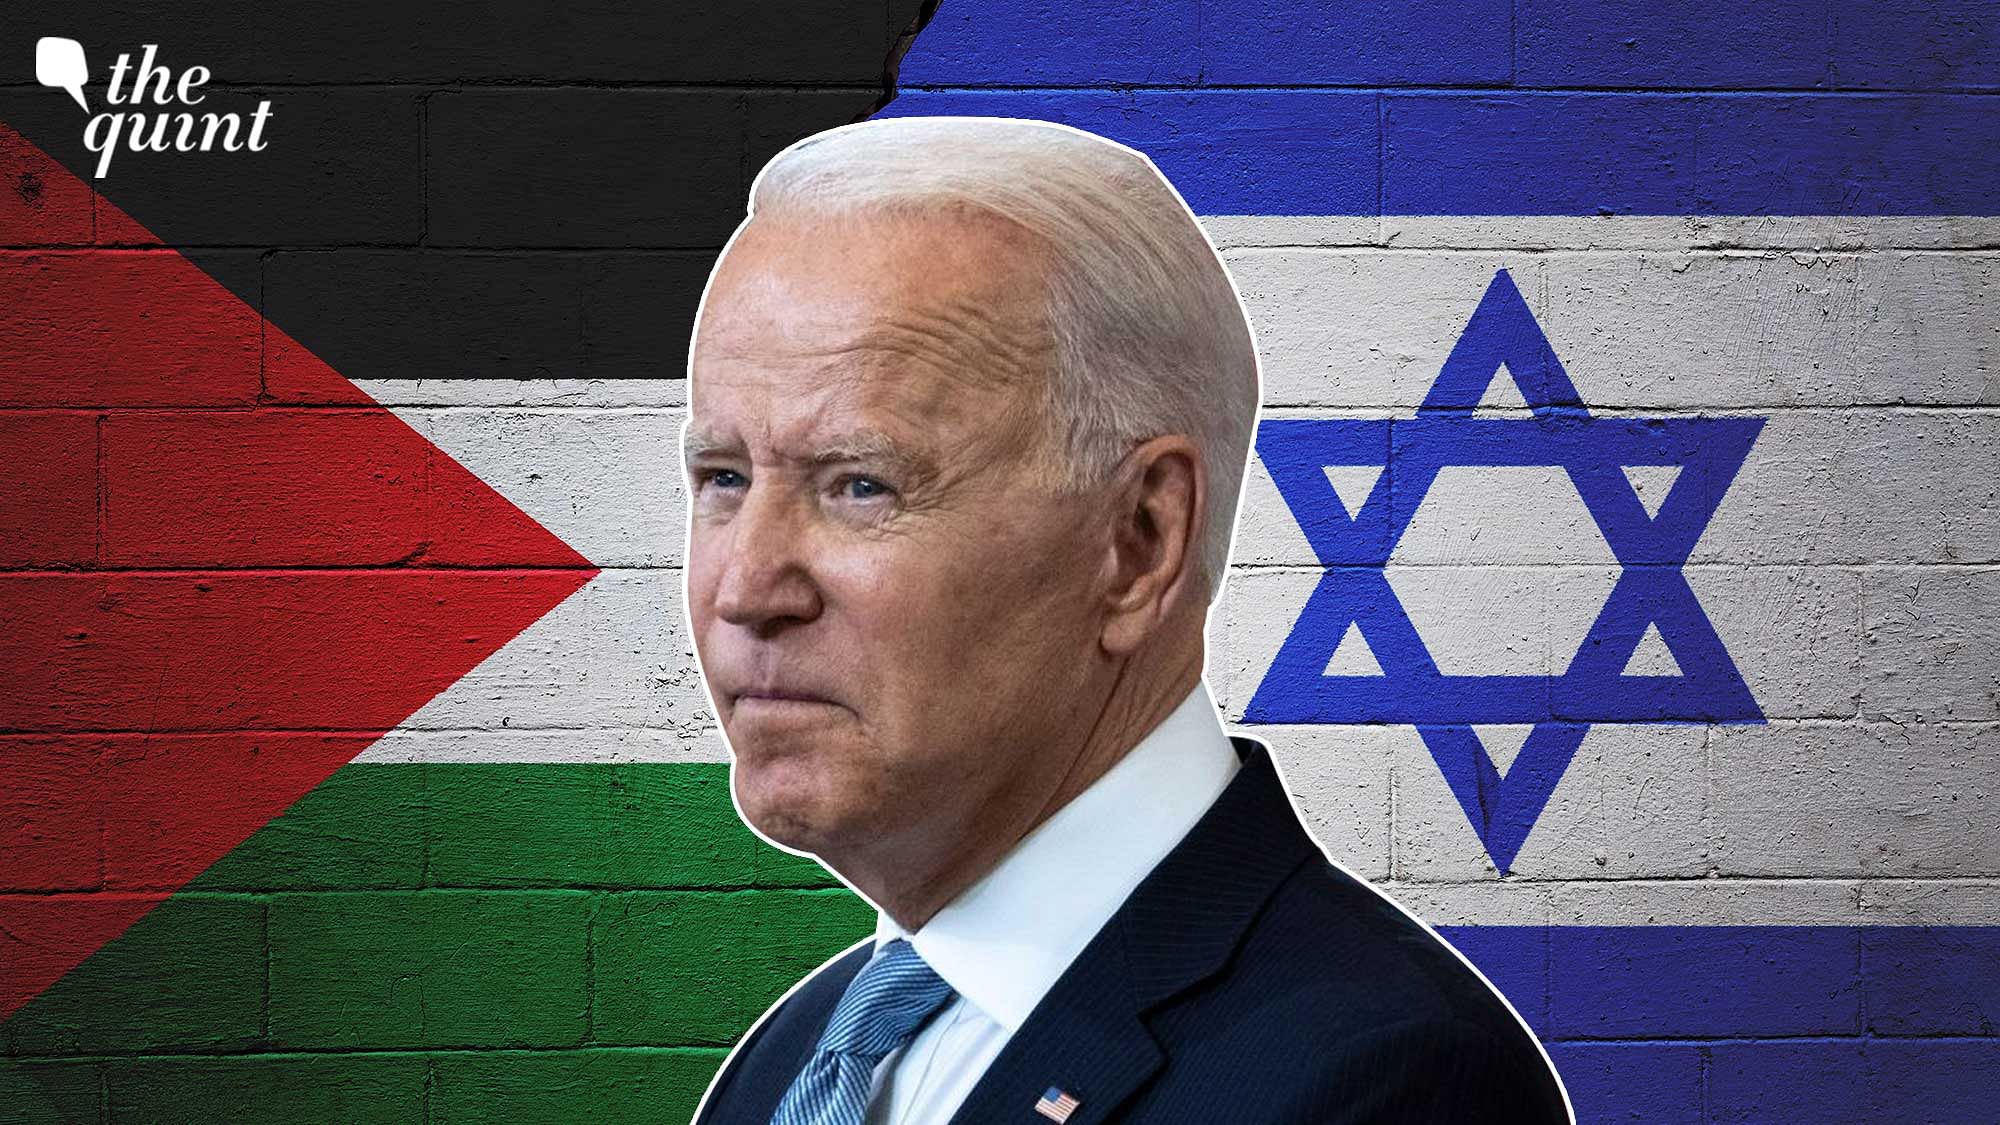 <div class="paragraphs"><p><a href="https://www.thequint.com/topic/joe-biden">US President Joe Biden</a> is on a visit to <a href="https://www.thequint.com/topic/israel">Israel</a> as part of his first Middle East tour since assuming office.</p></div>